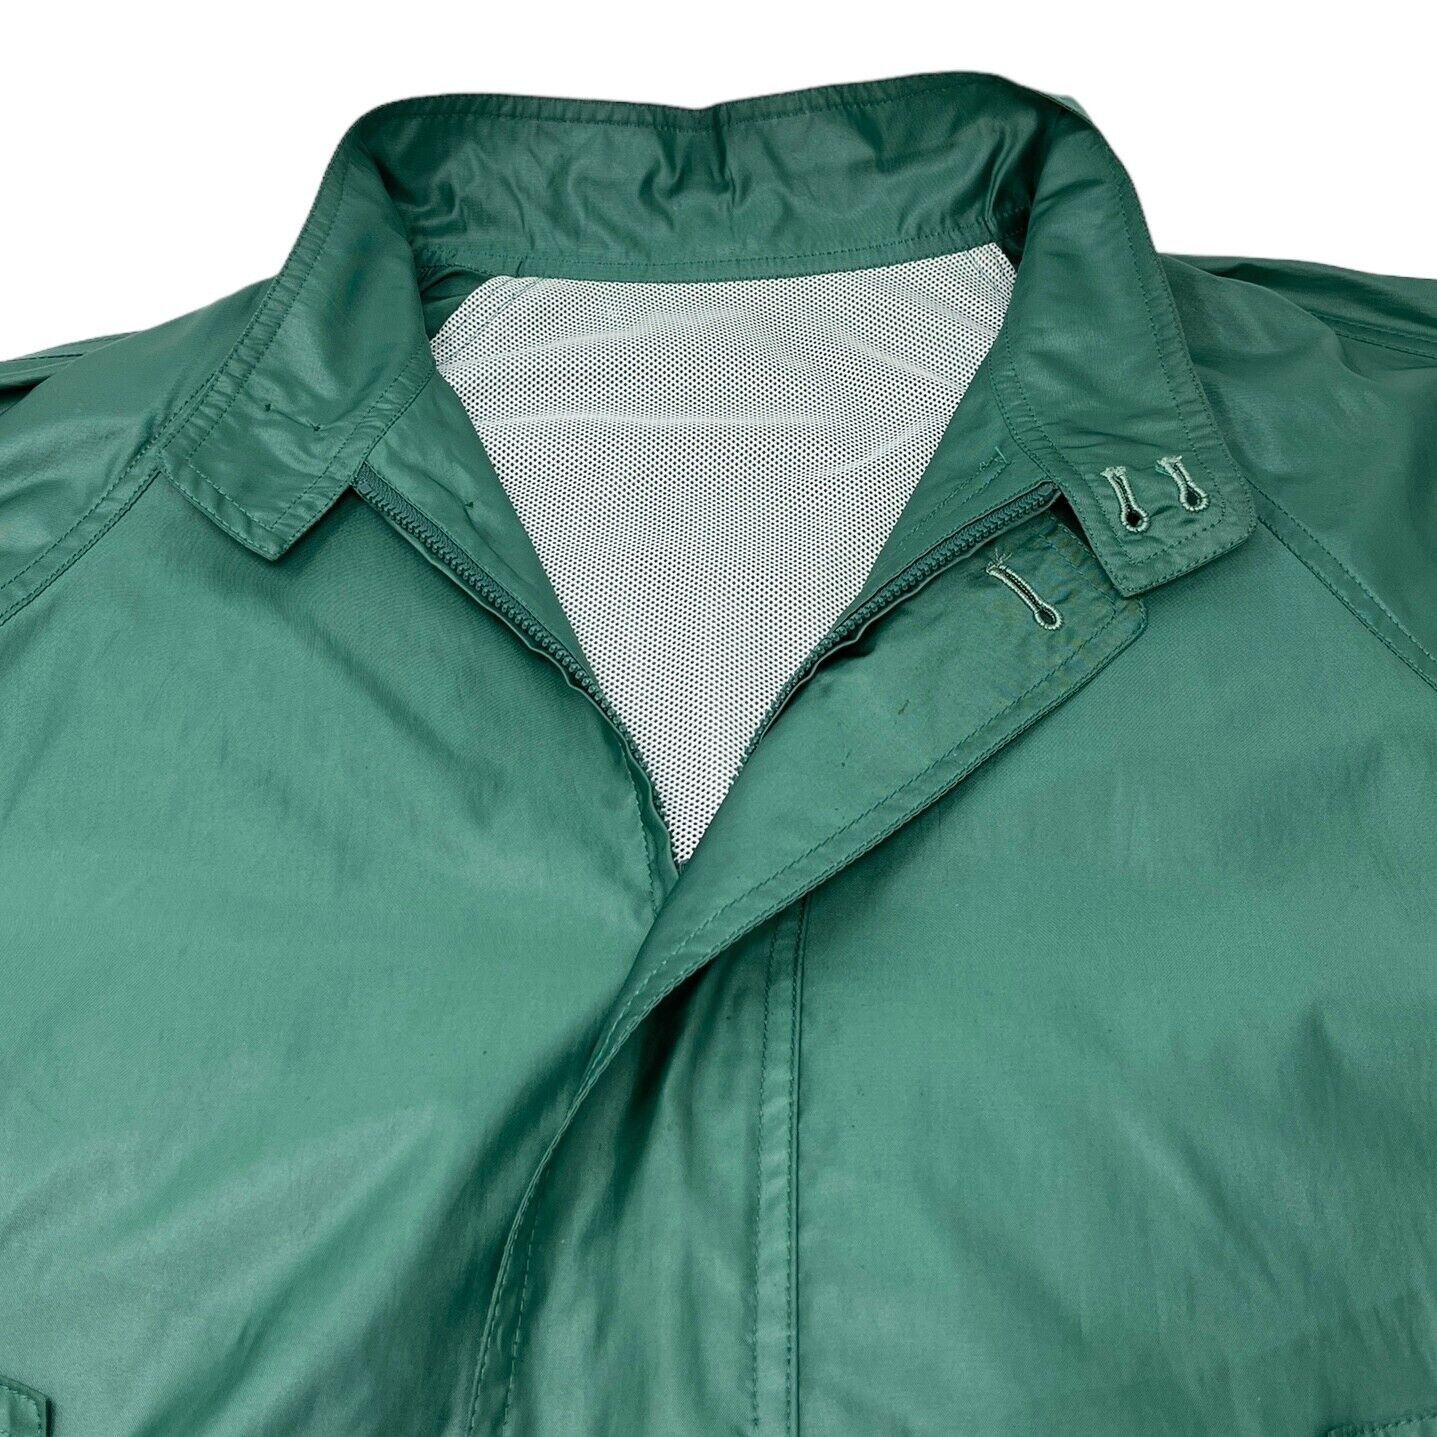 Christian Dior Sports Vintage Big Logo Track Jacket #L Green Polyester RankAB